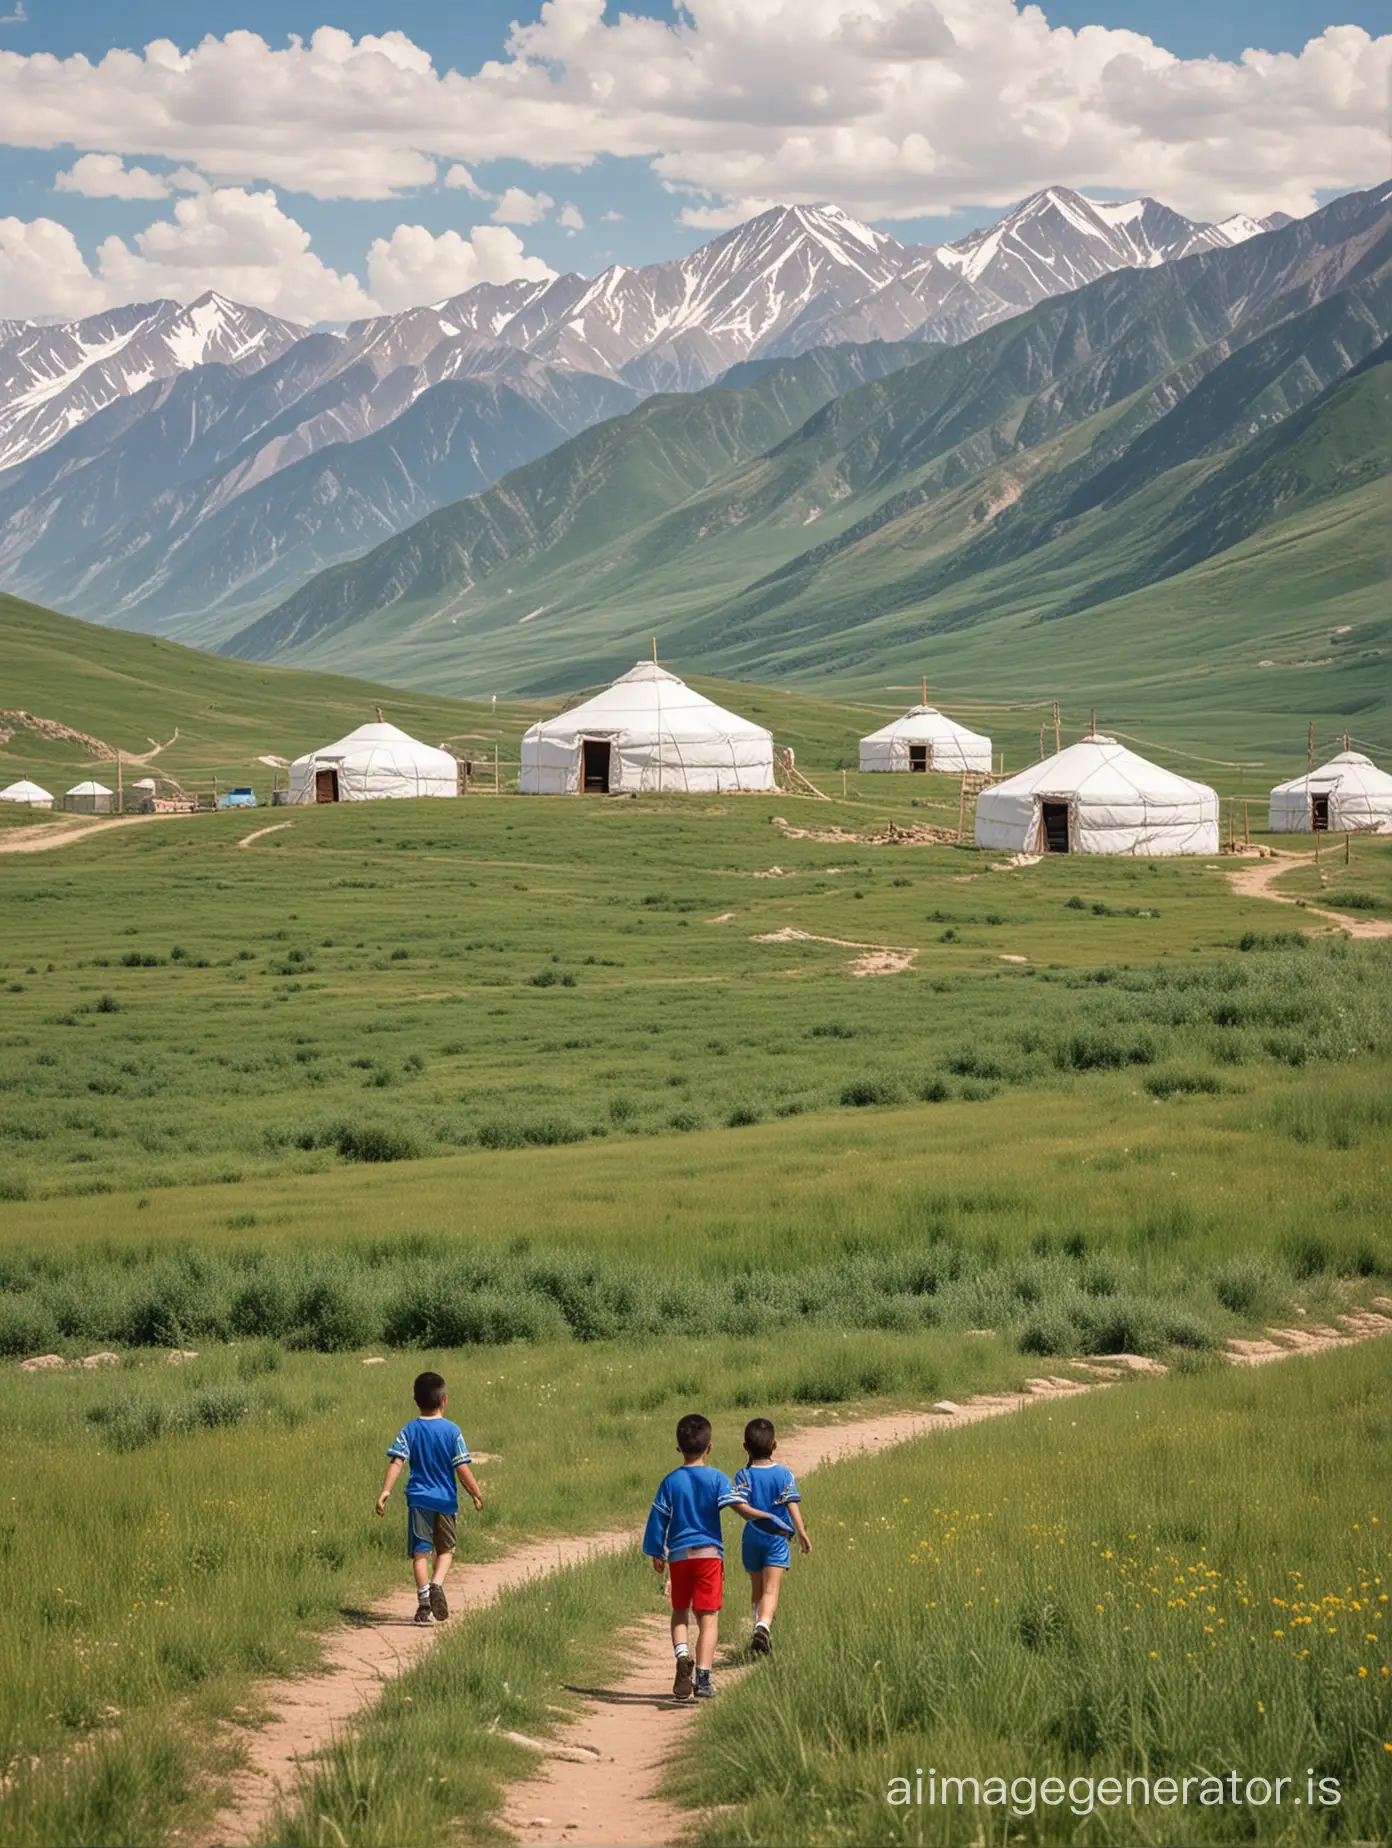 Kazakh-Children-Enjoying-Summer-Ball-Games-Amidst-Pristine-Yurts-and-Majestic-Mountains